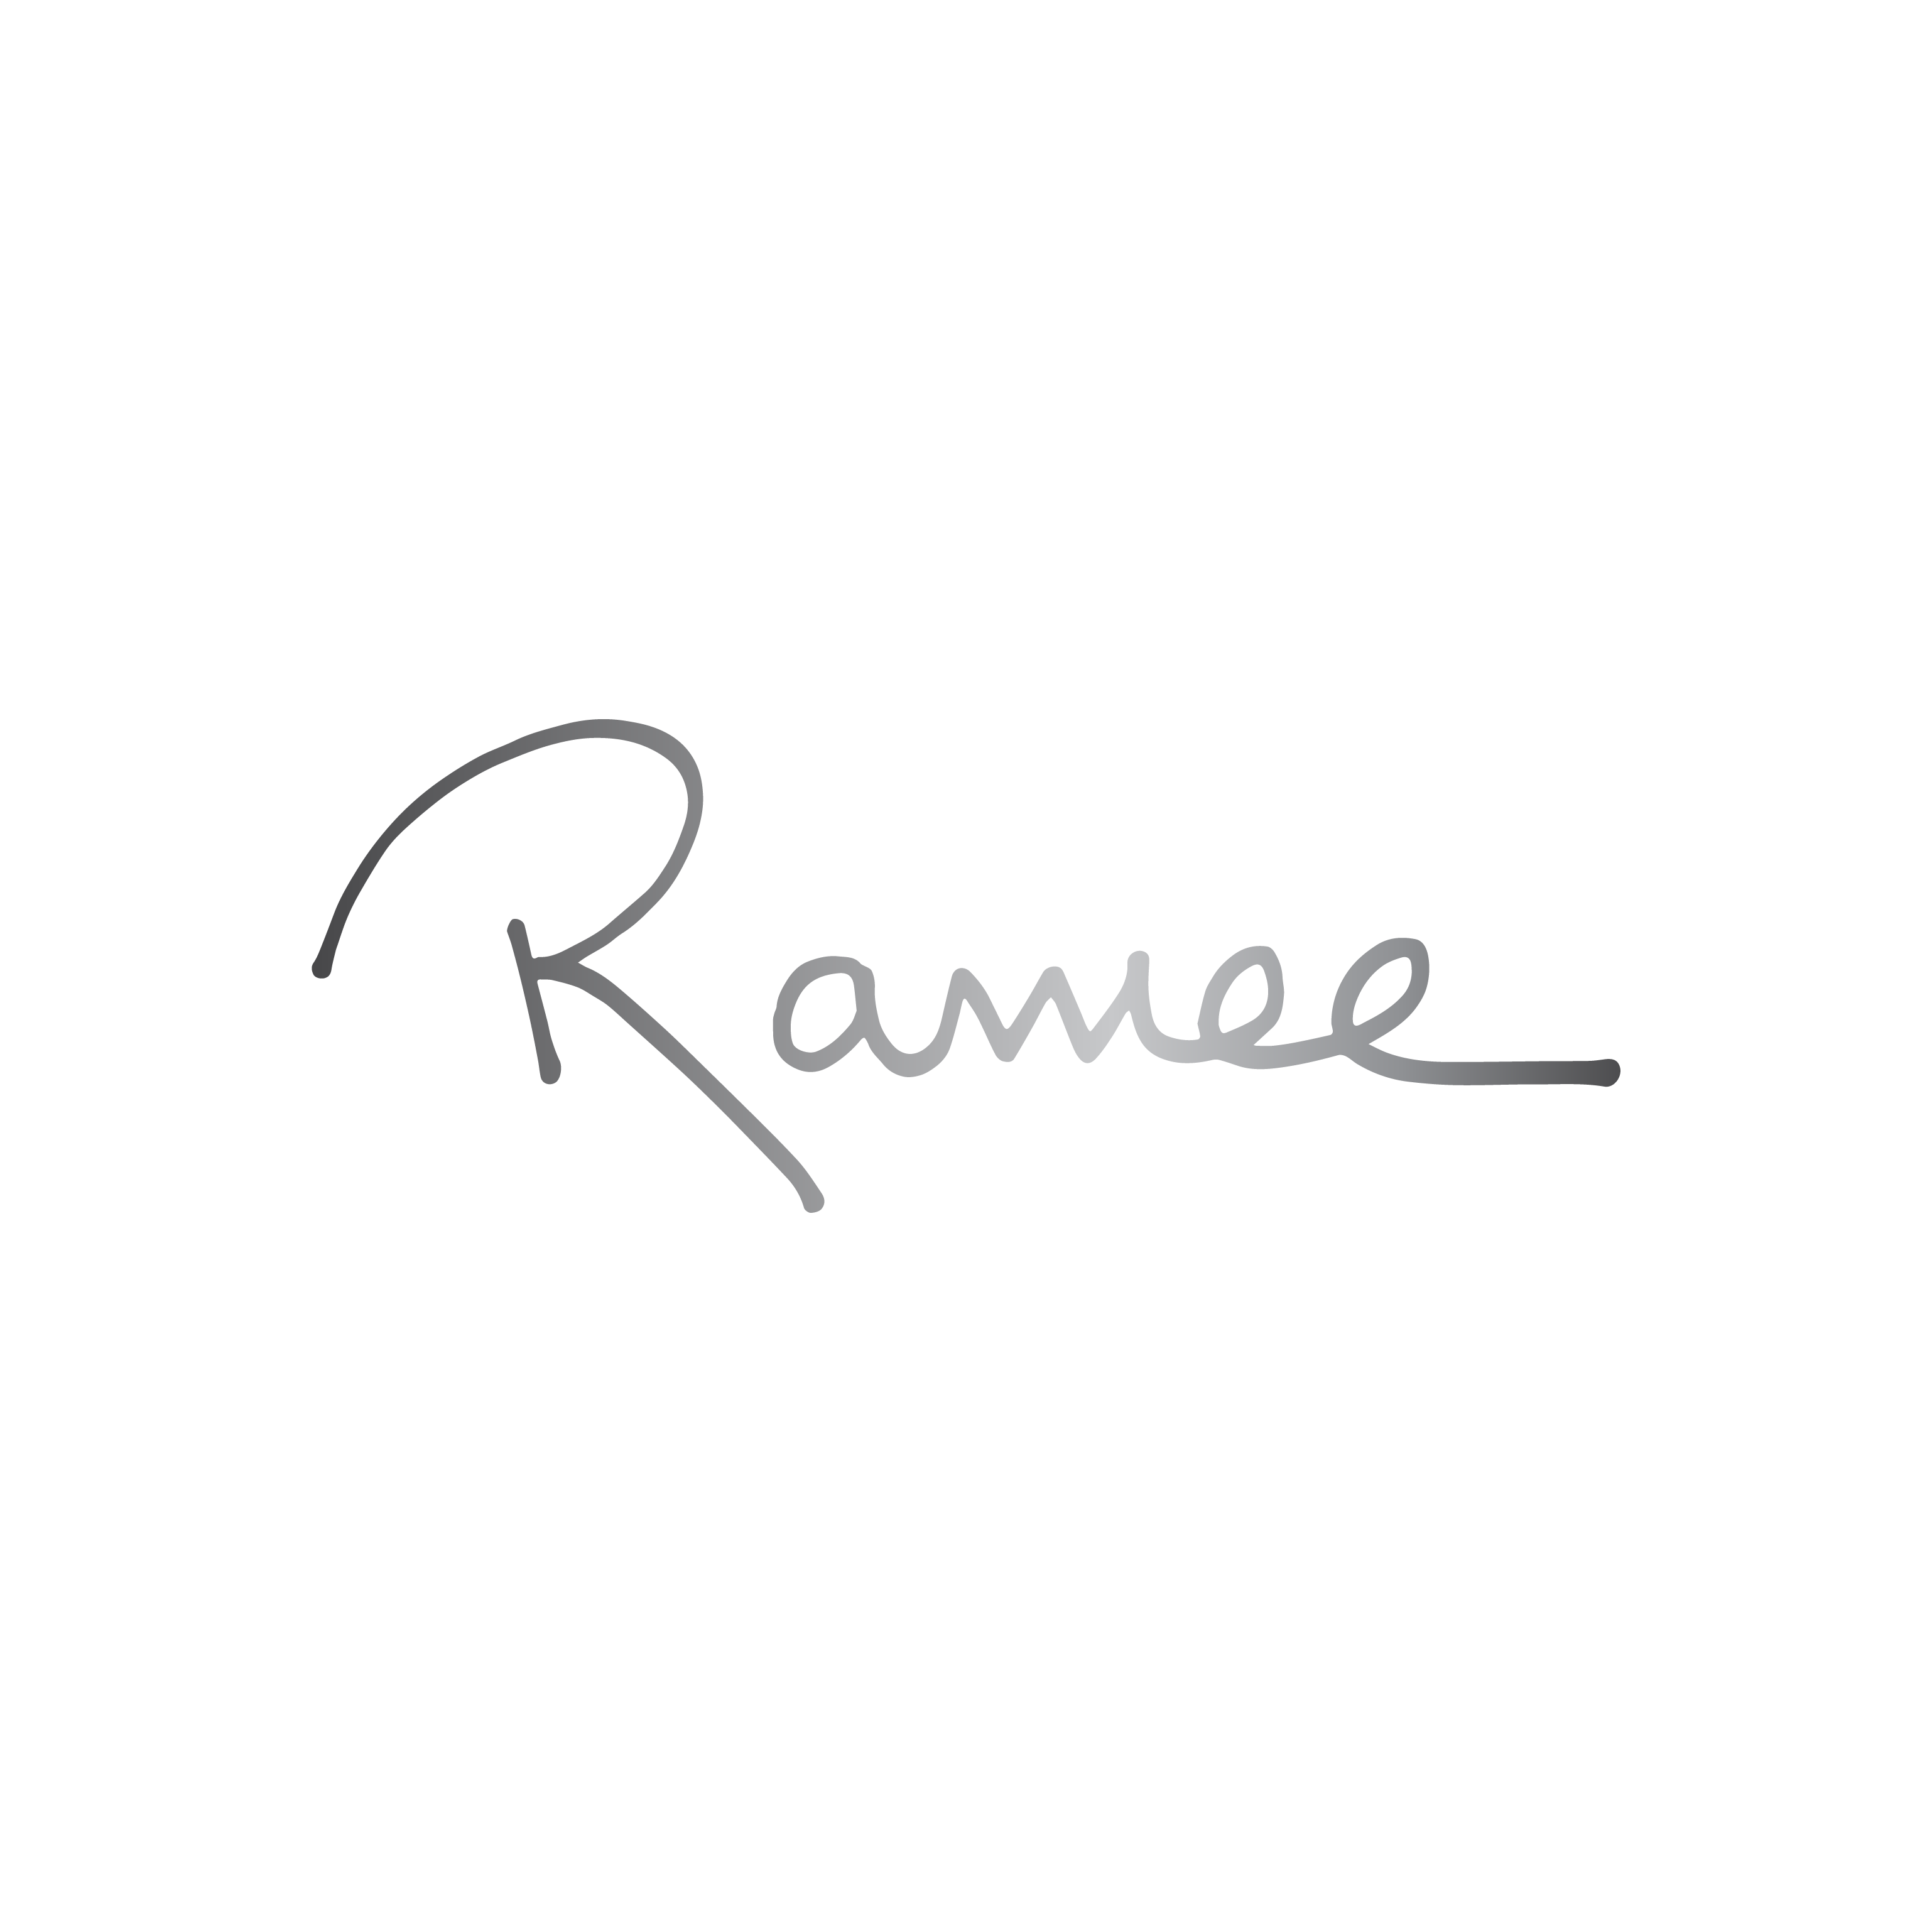 The Ramee